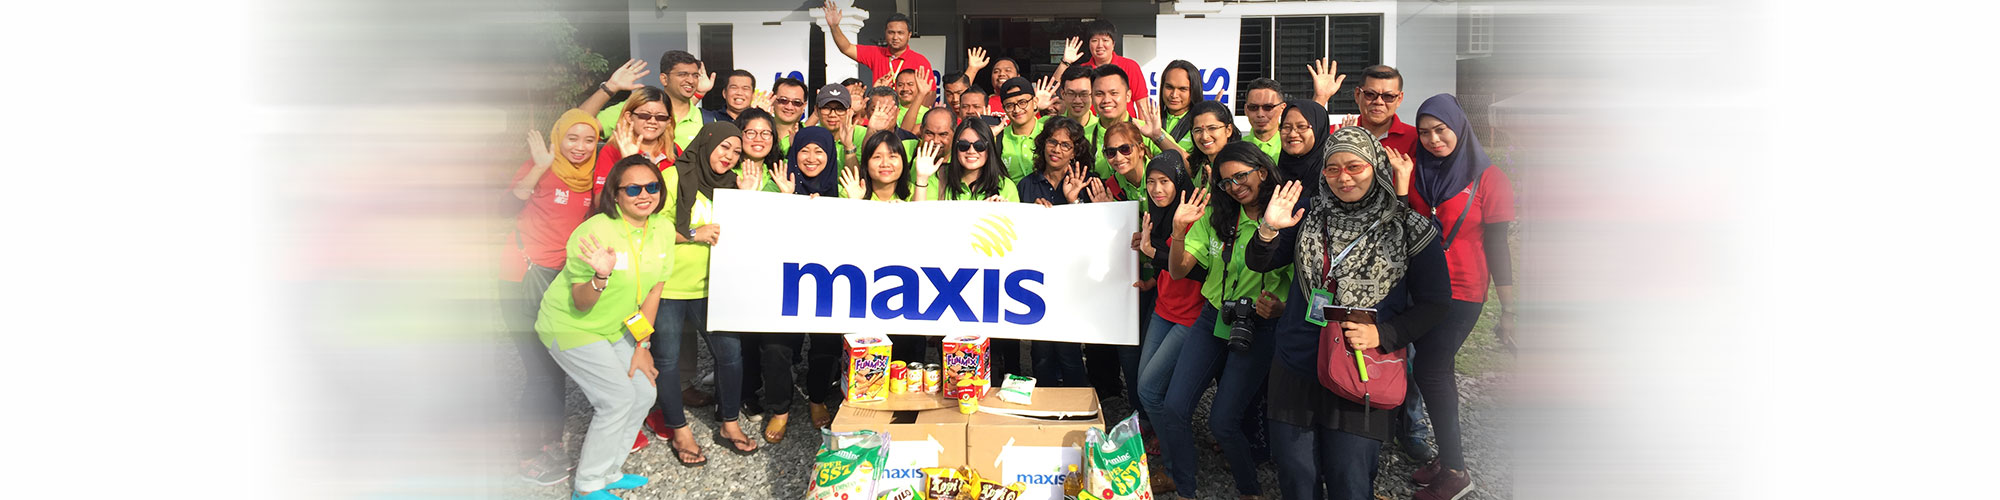 Maxis’ #MemoriRaya project gives the gift of memories this festive season